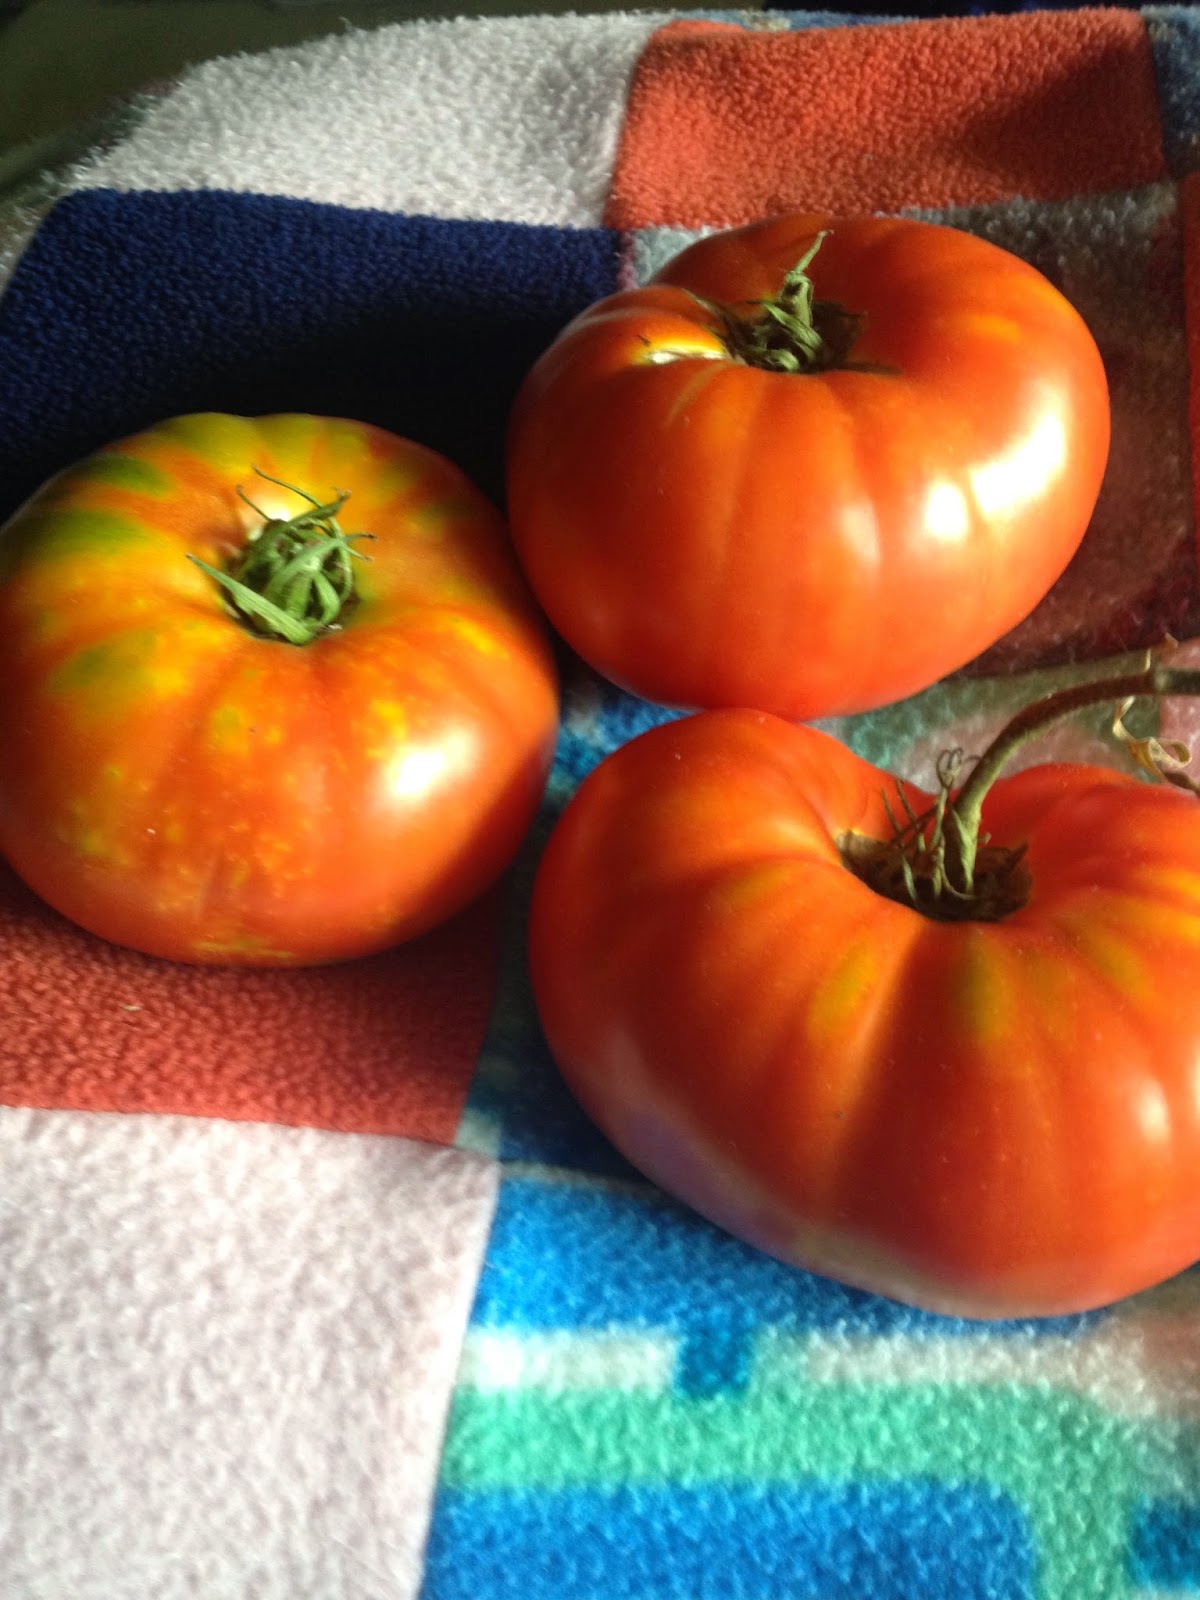 Slicer Tomatoes - Burpee